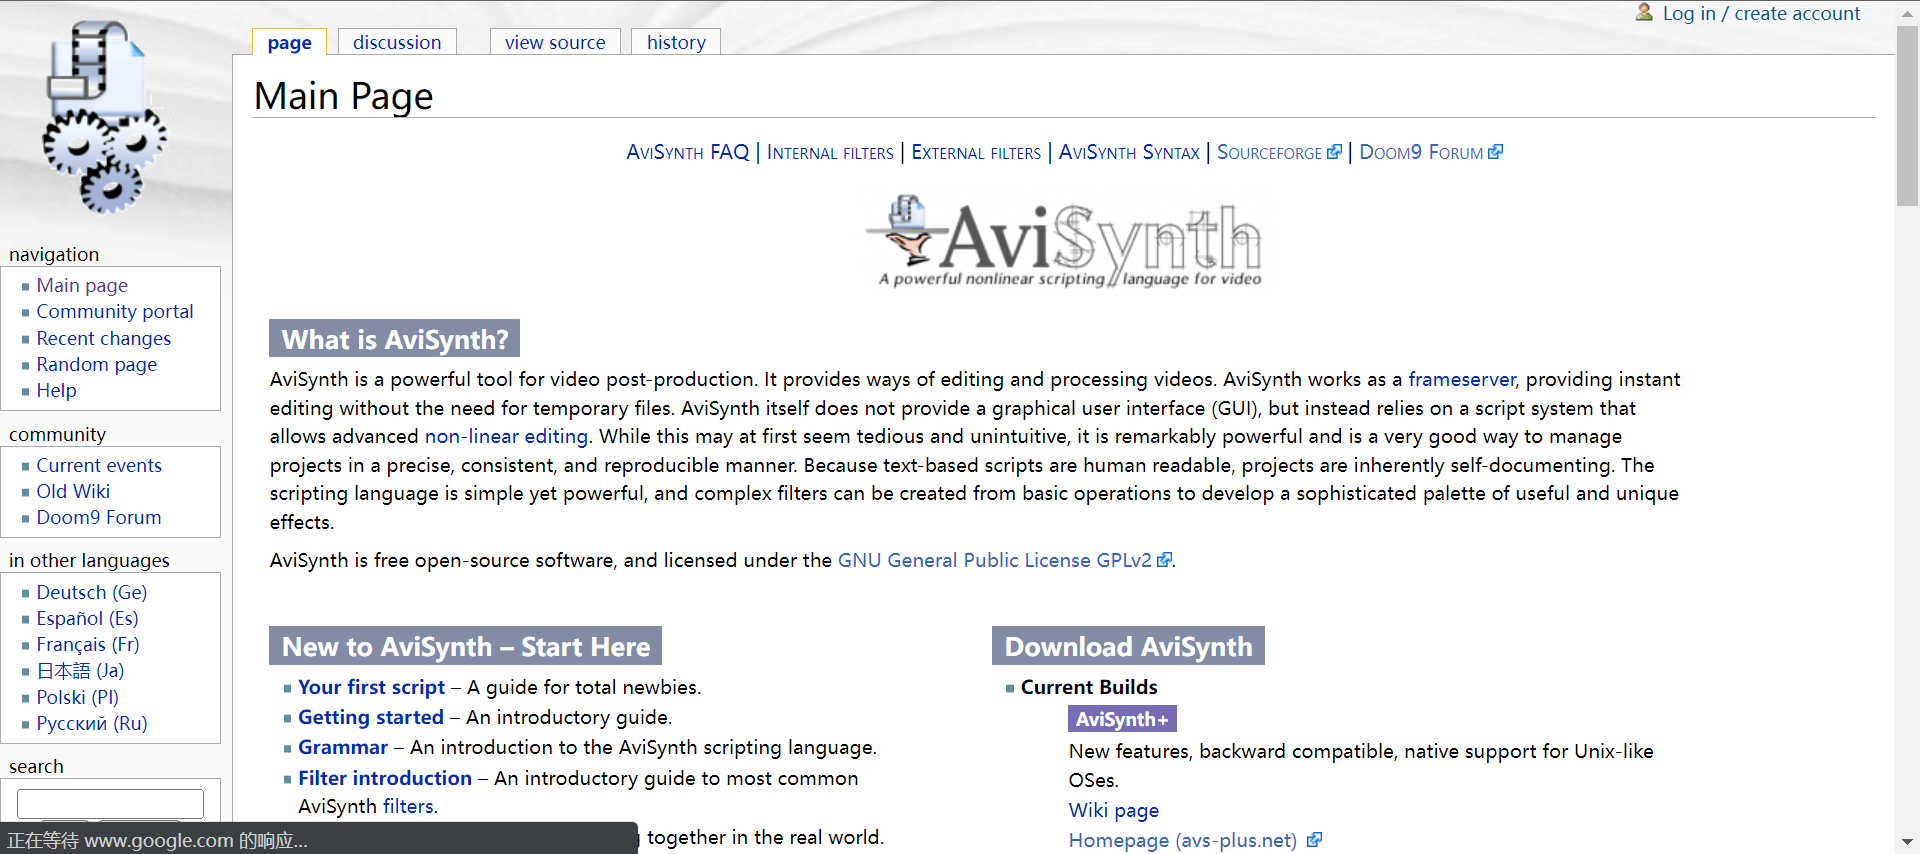 AviSynth's website